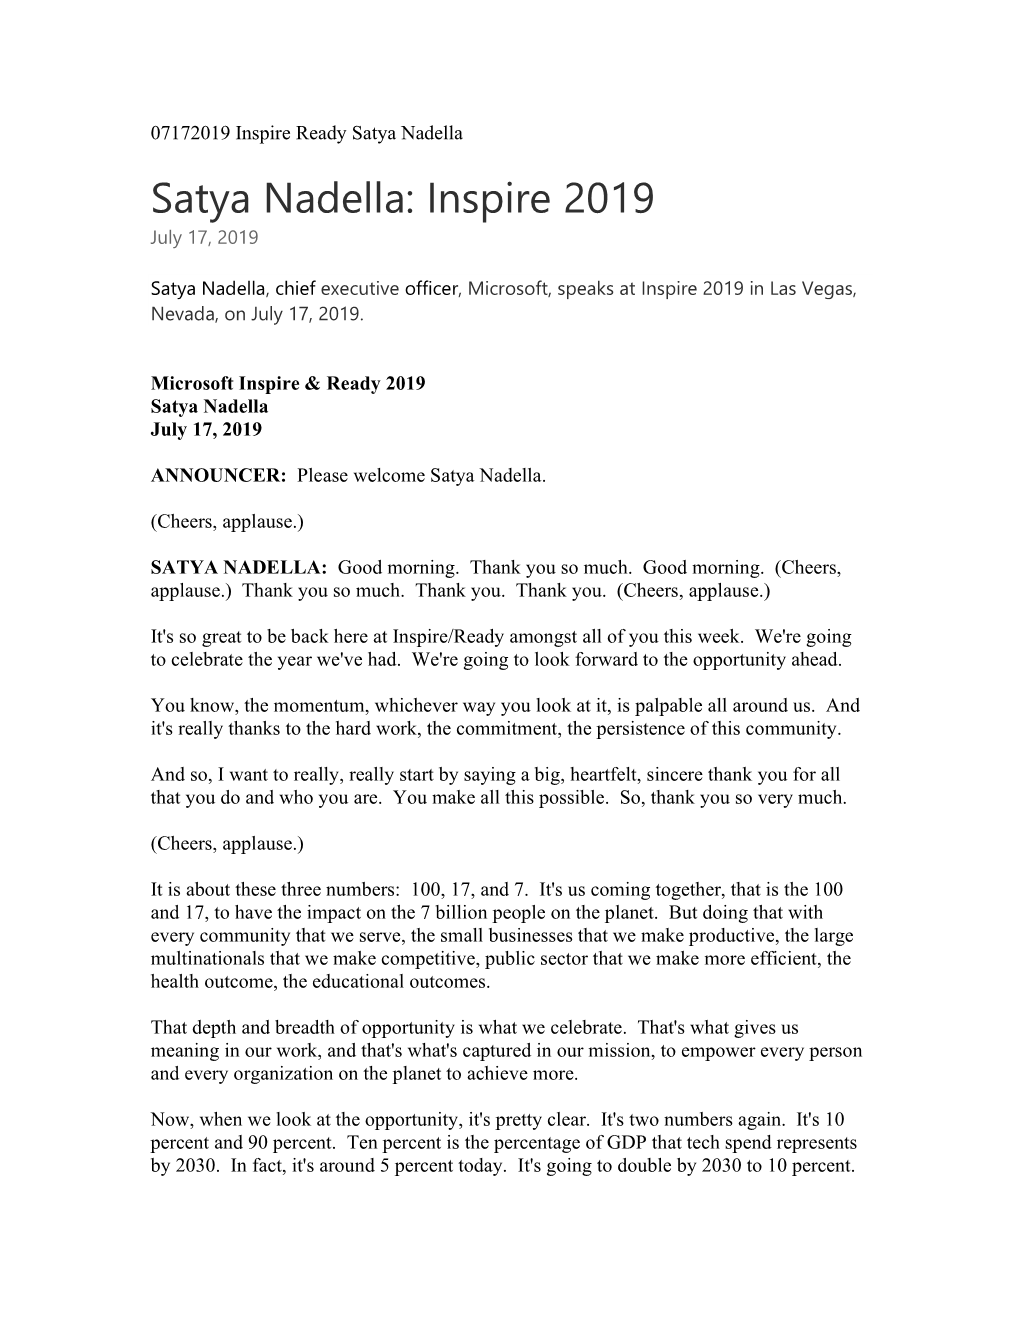 Satya Nadella: Inspire 2019 July 17, 2019